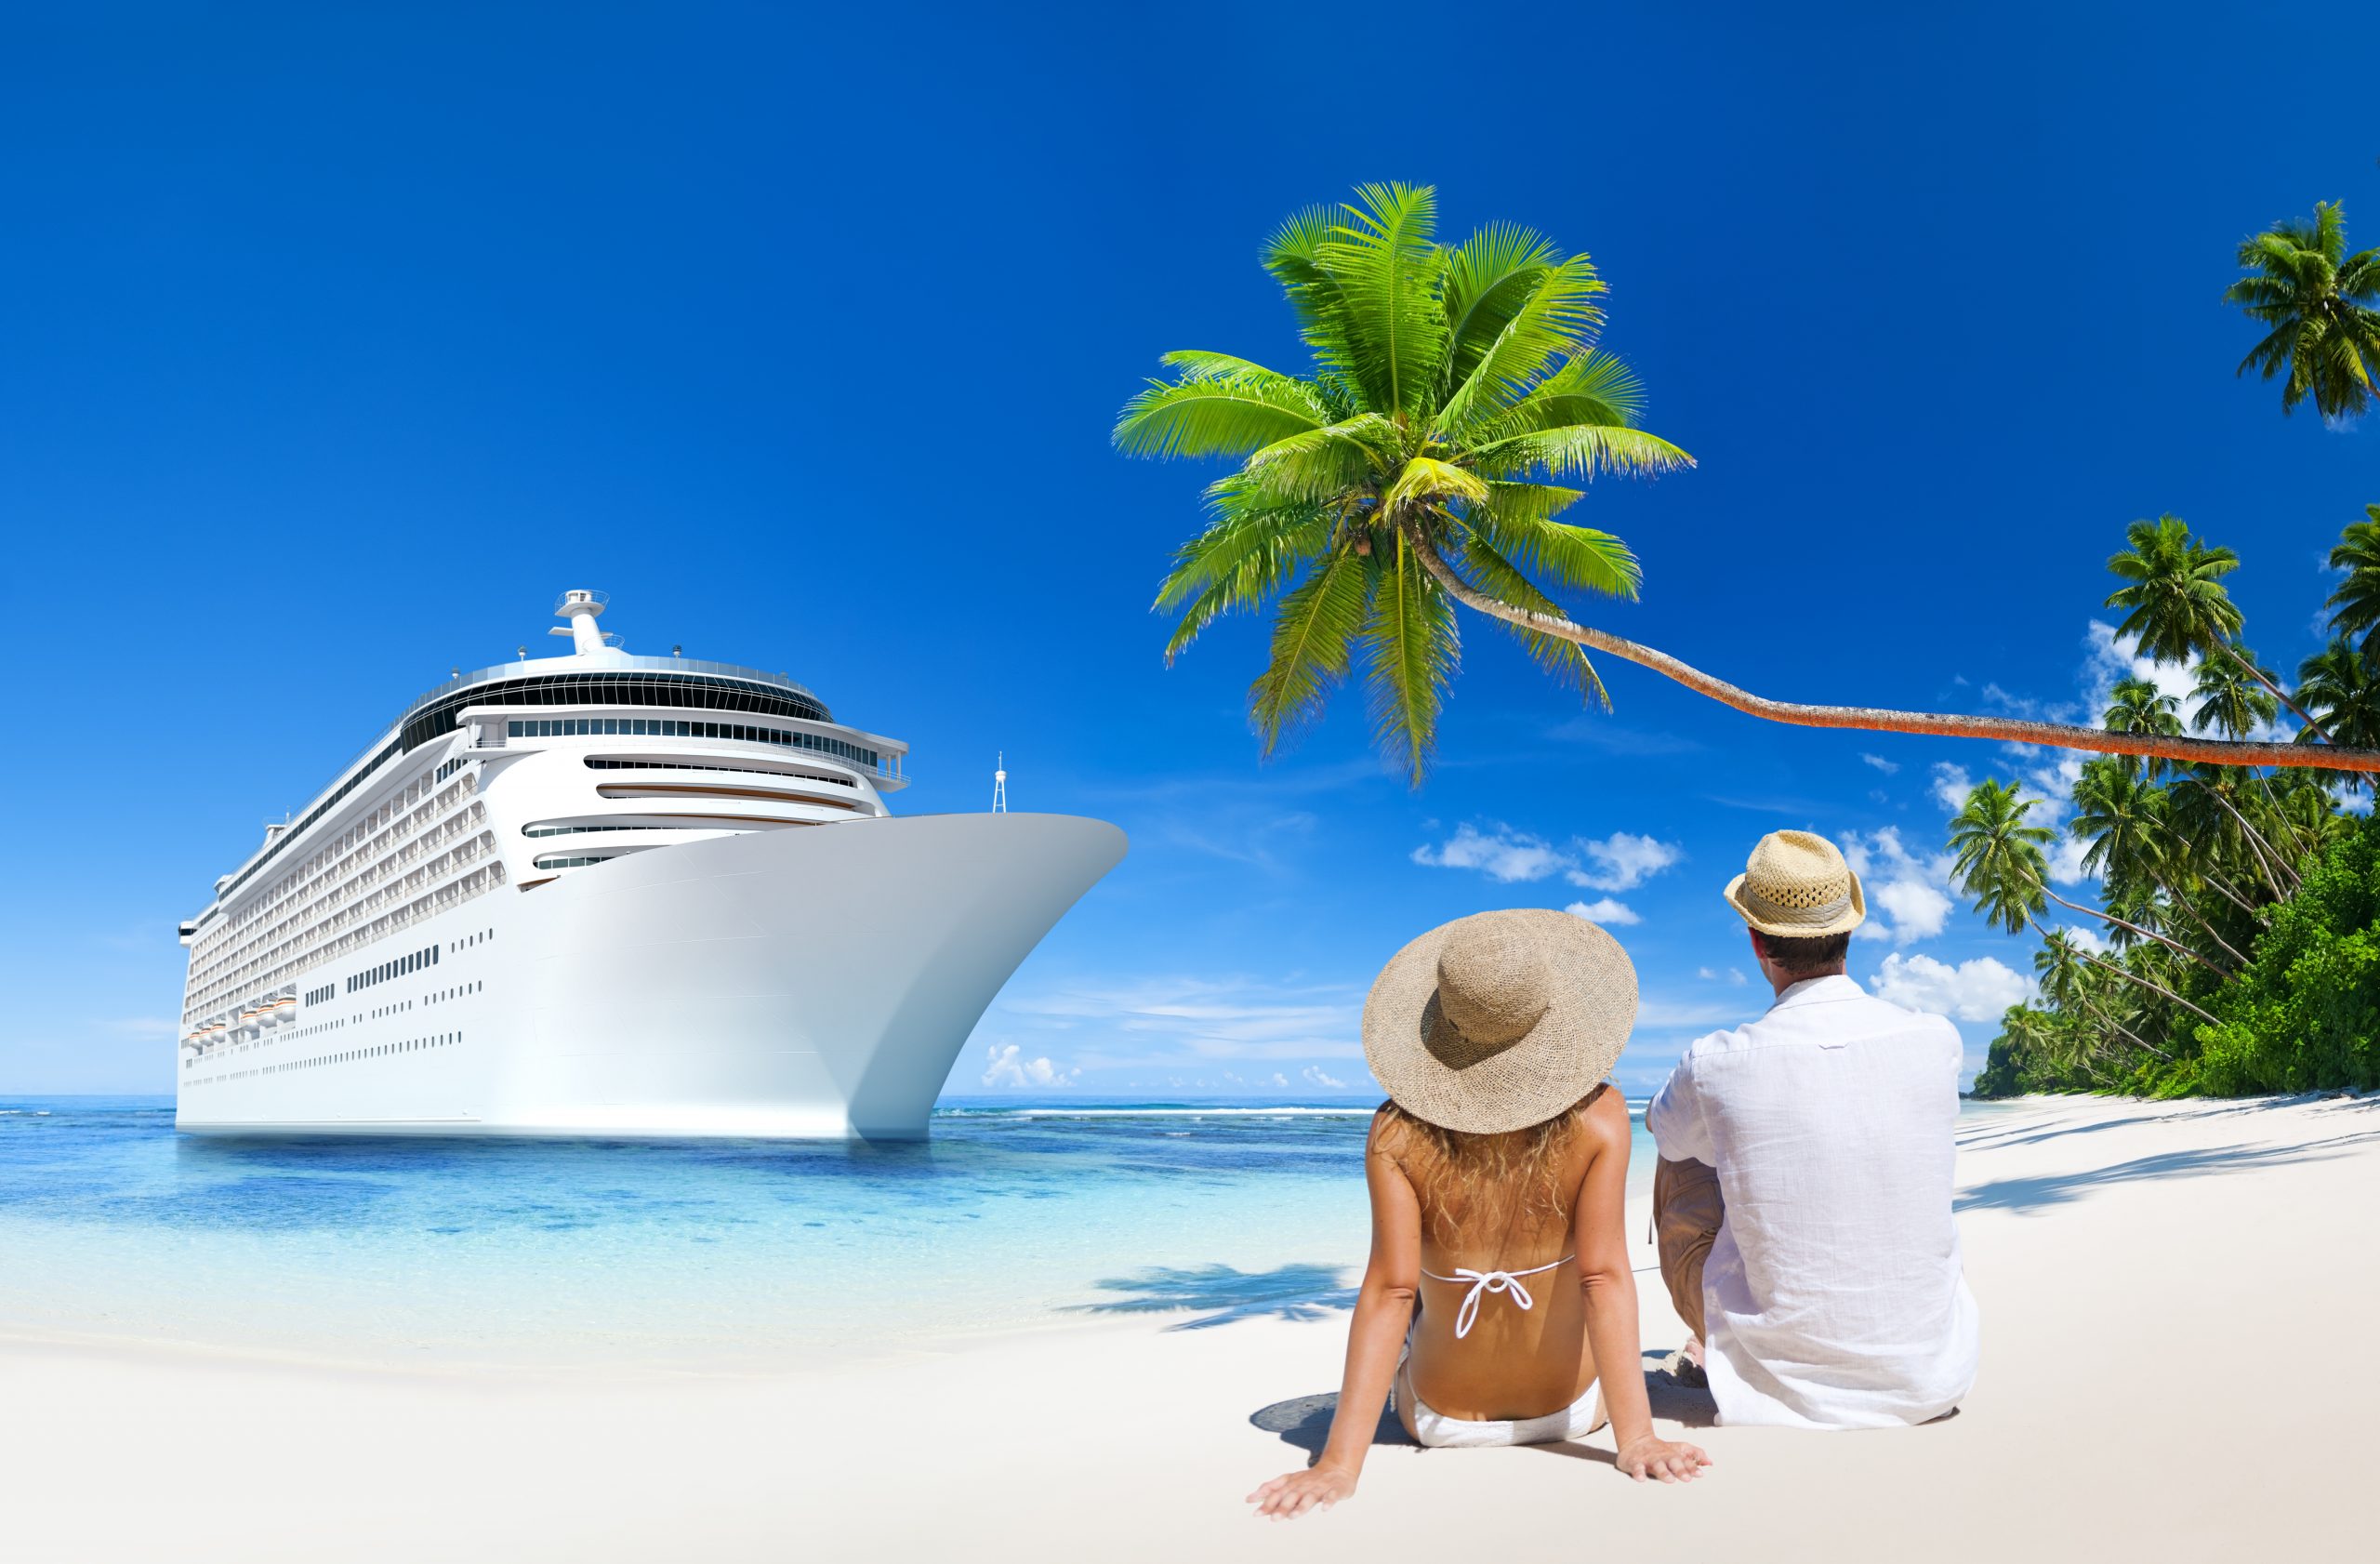 cruise travel insurance australia reviews